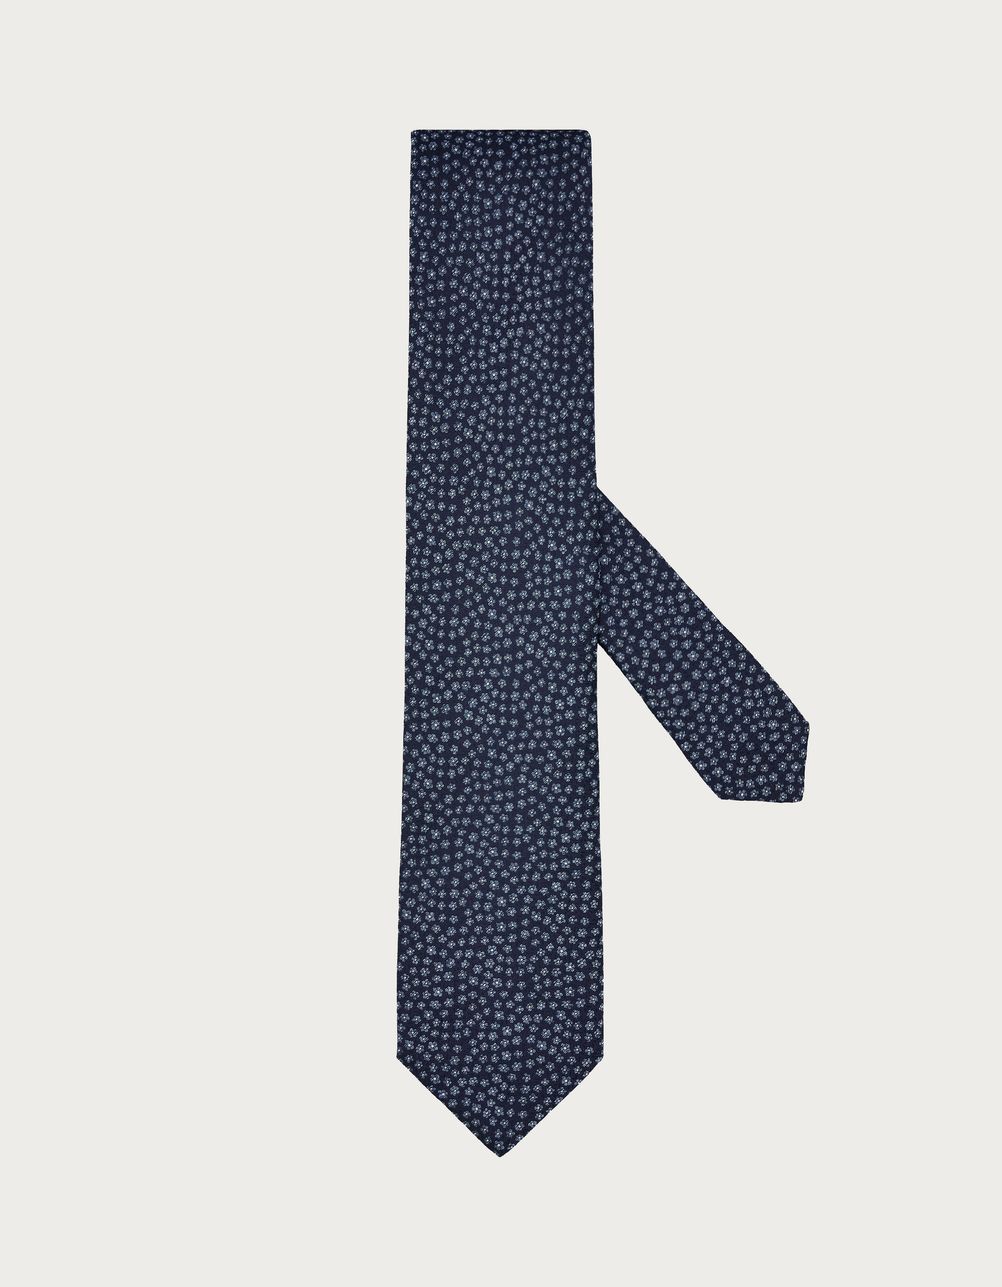 Cravate en soie bleu denim avec fantaisie